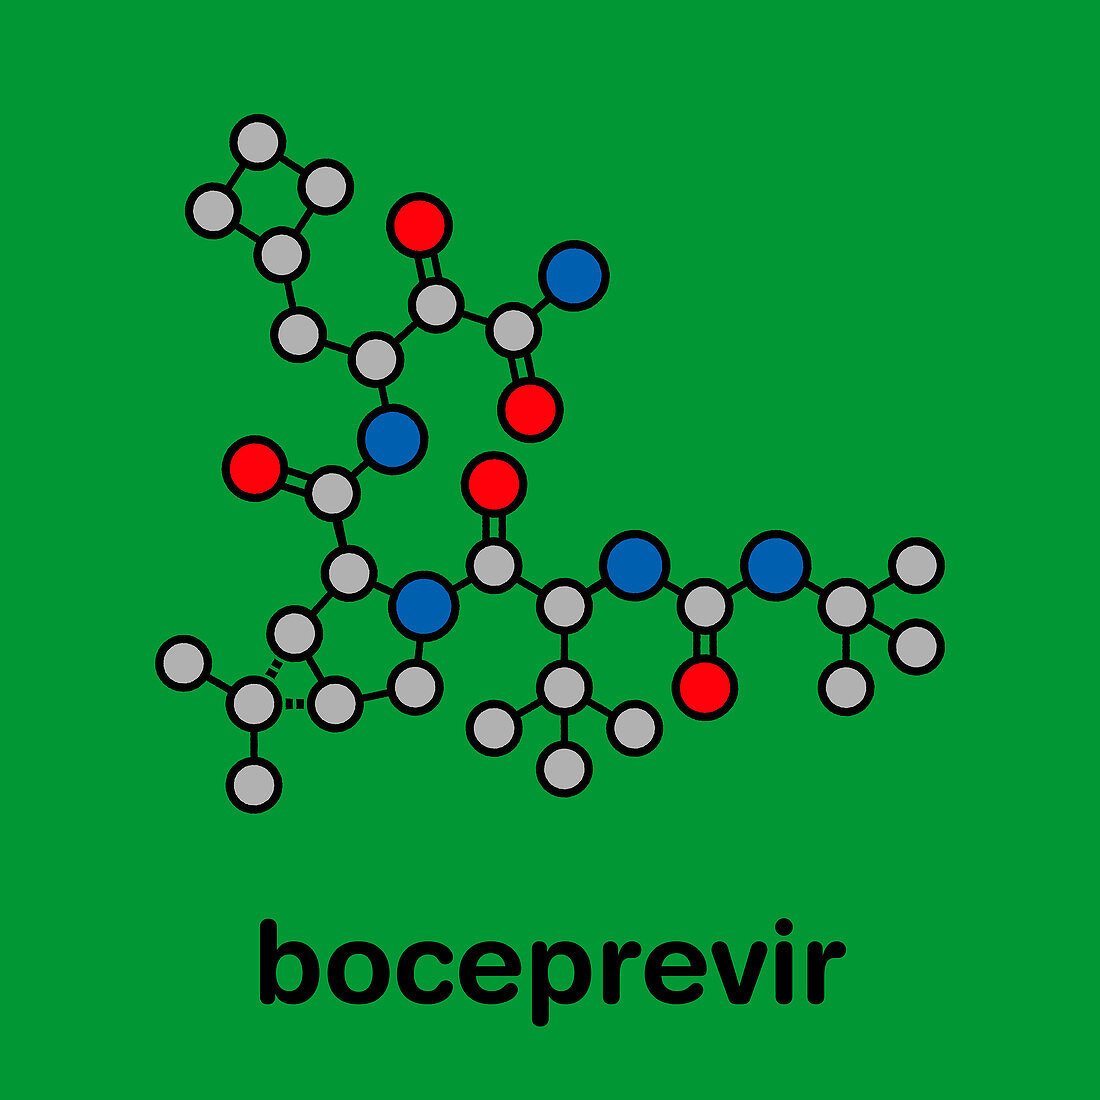 Boceprevir hepatitis C virus drug, molecular model